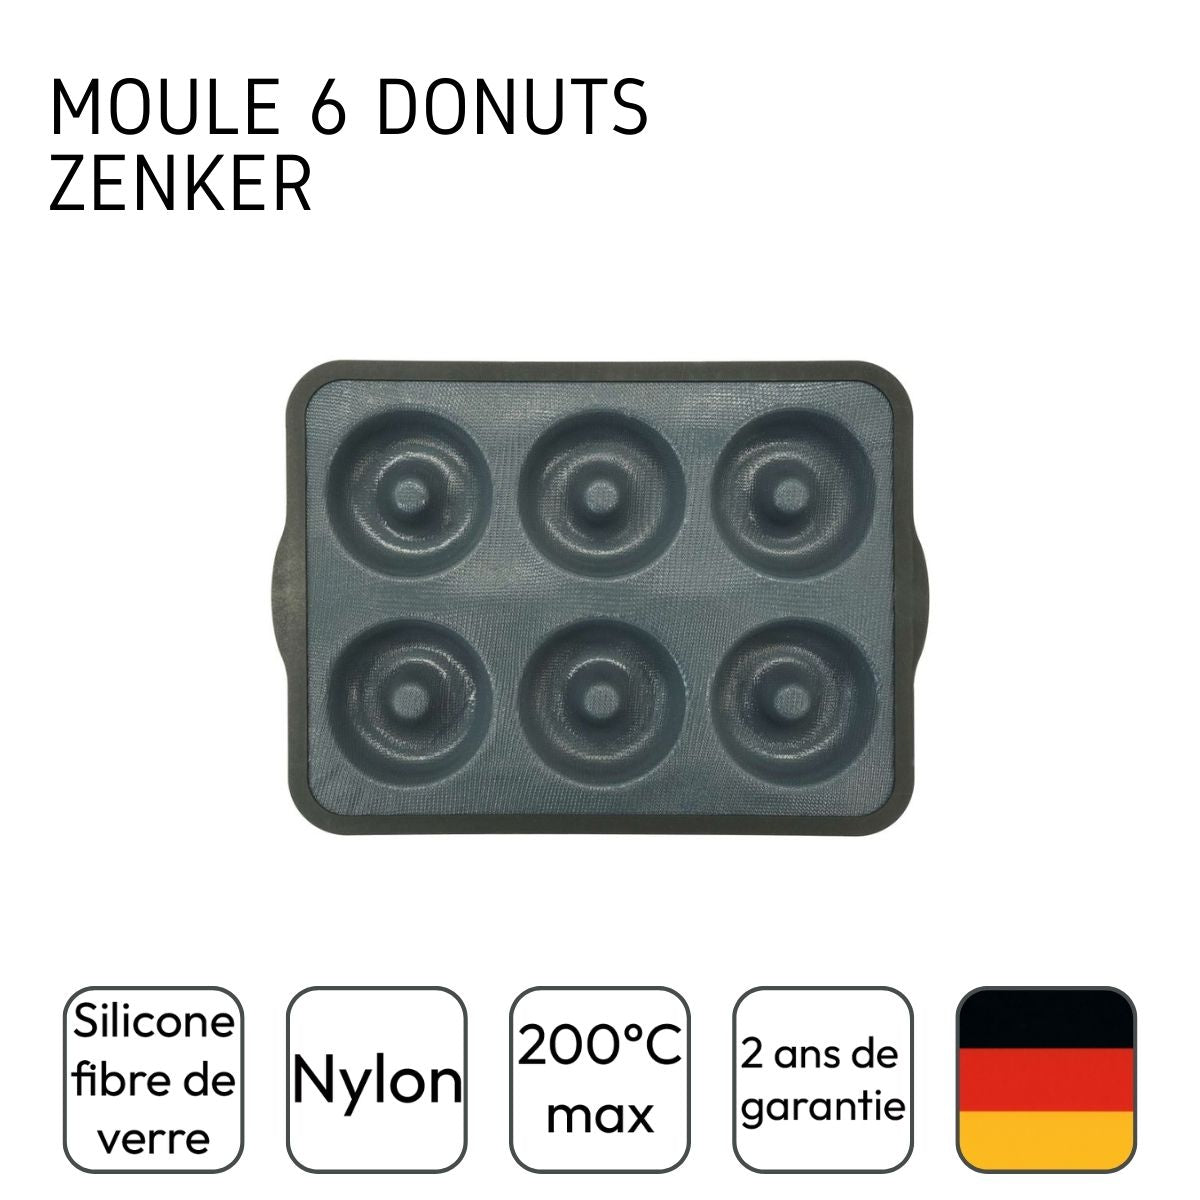 Moule 6 donuts Zenker Silicone fibre de verre